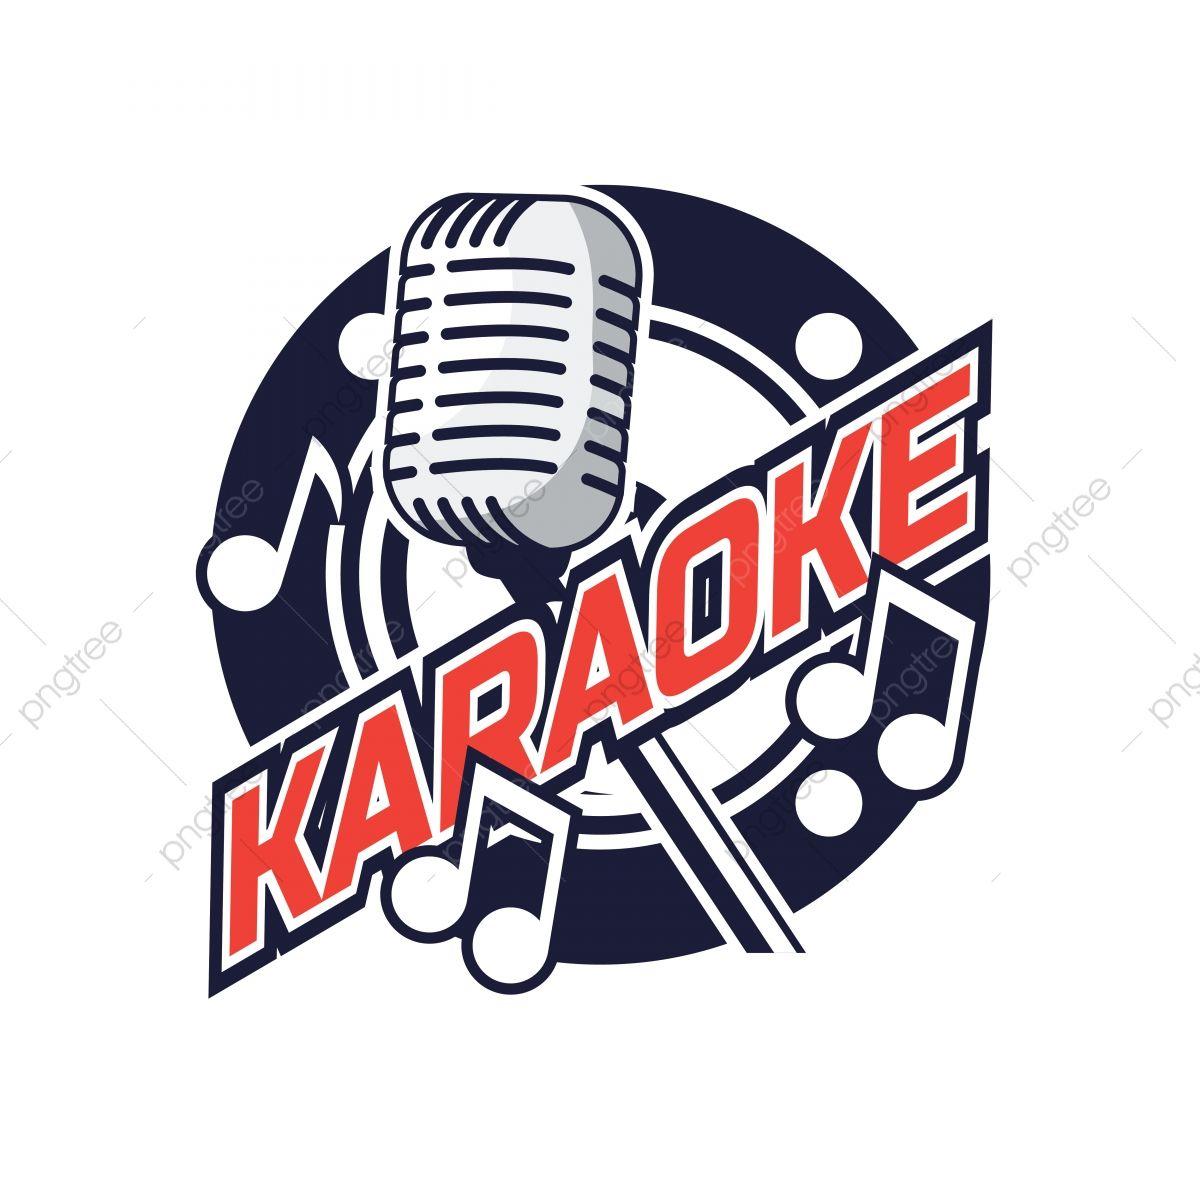 Karaoke Logo - Karaoke Logo, Vector Illustration, Karaoke Party, Karaoke Night